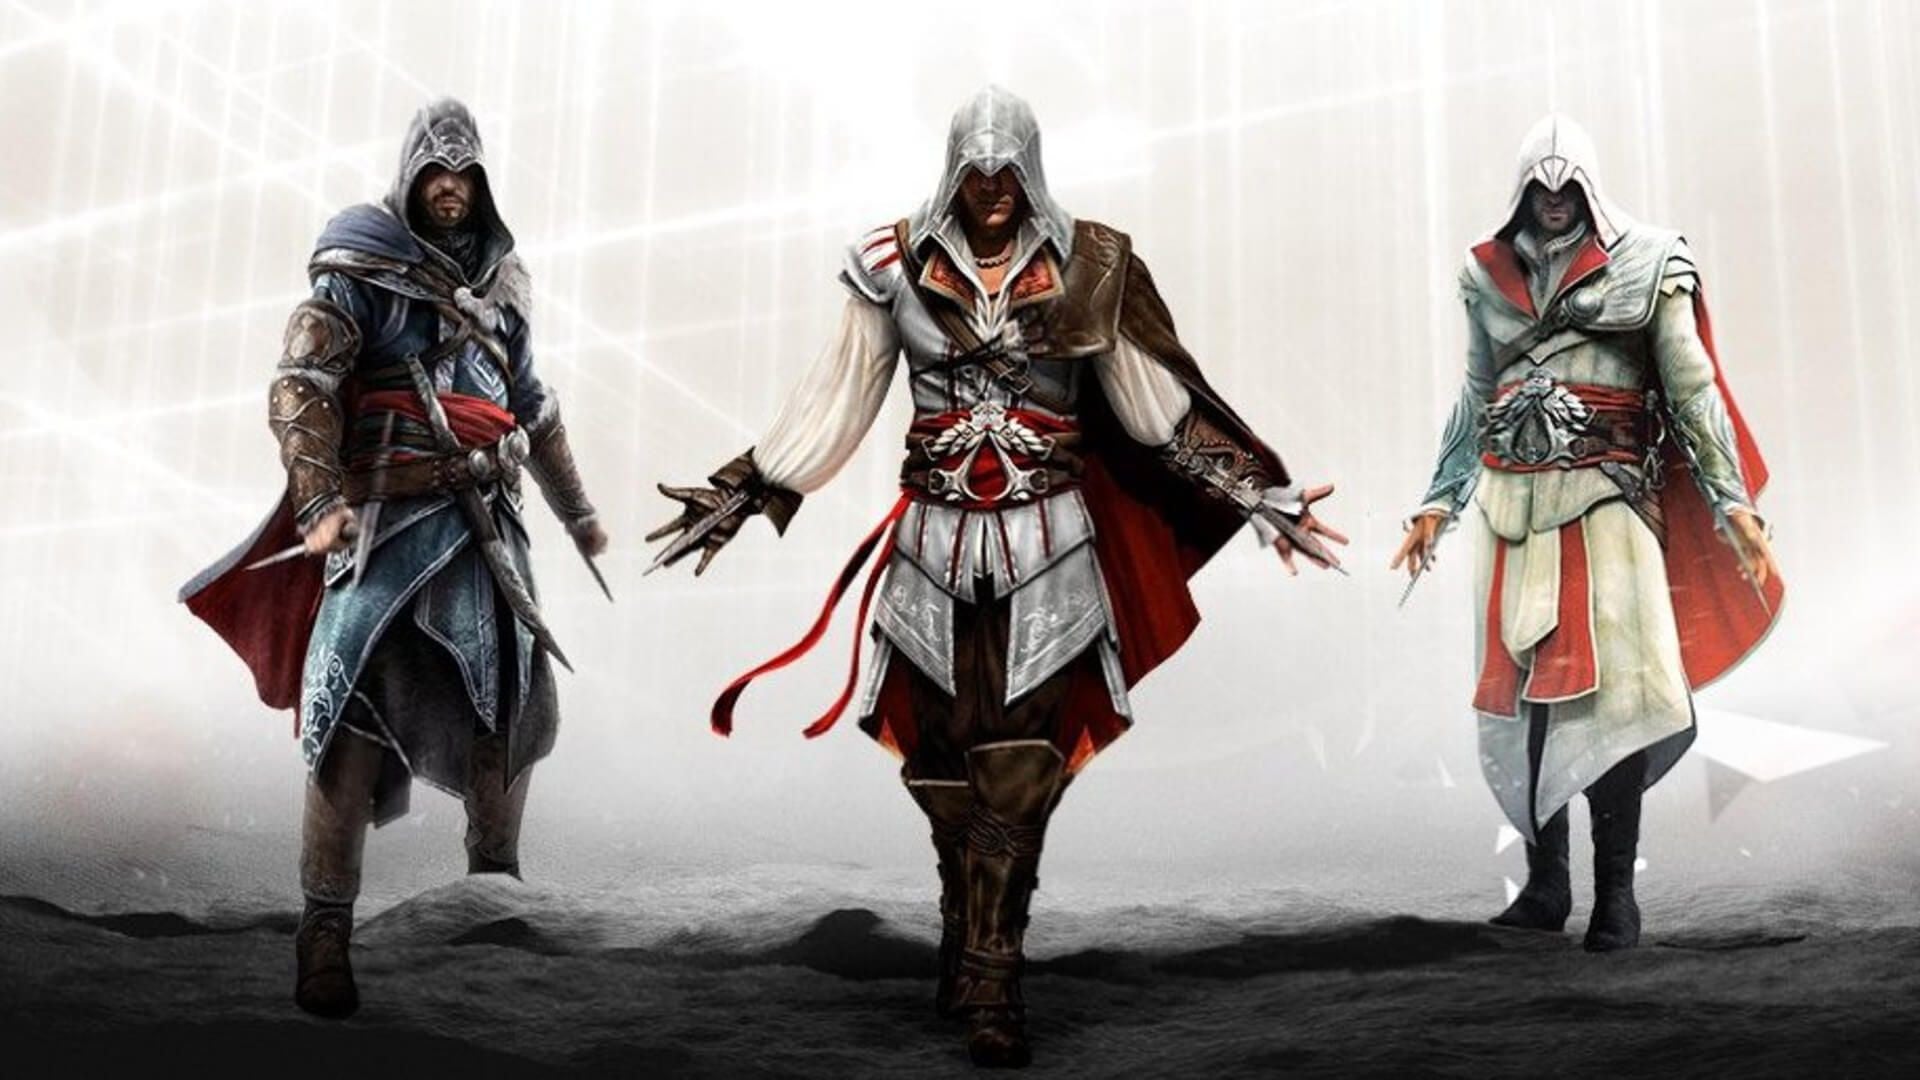 Assassin's Creed Ezio Trilogy